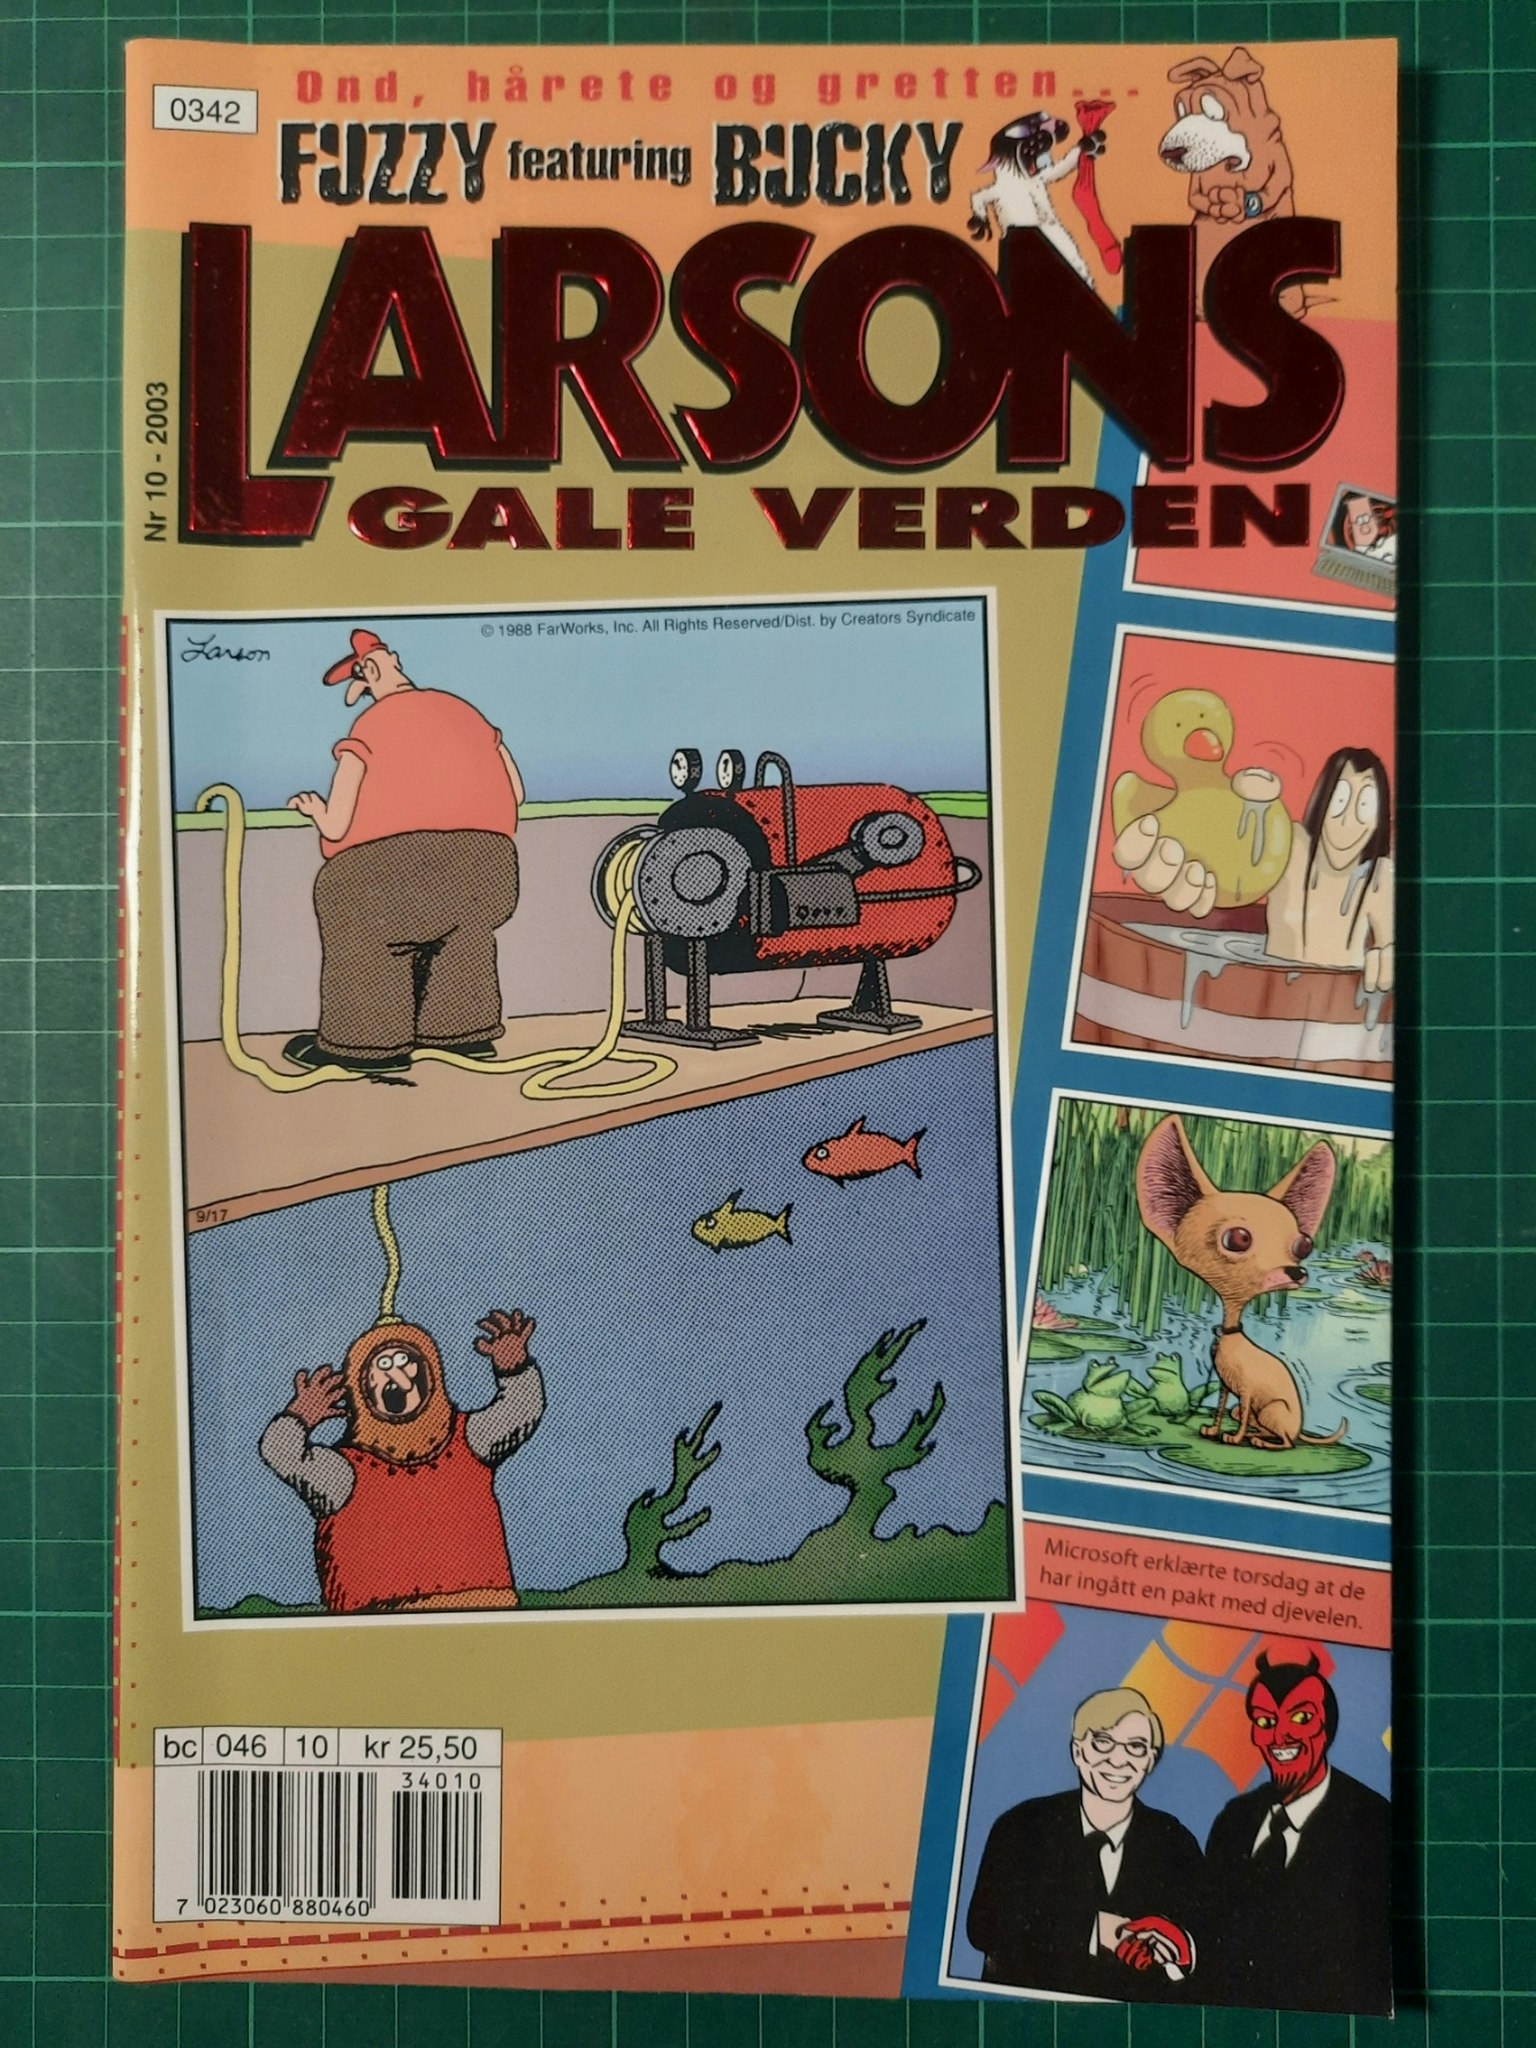 Larsons gale verden 2003 - 10